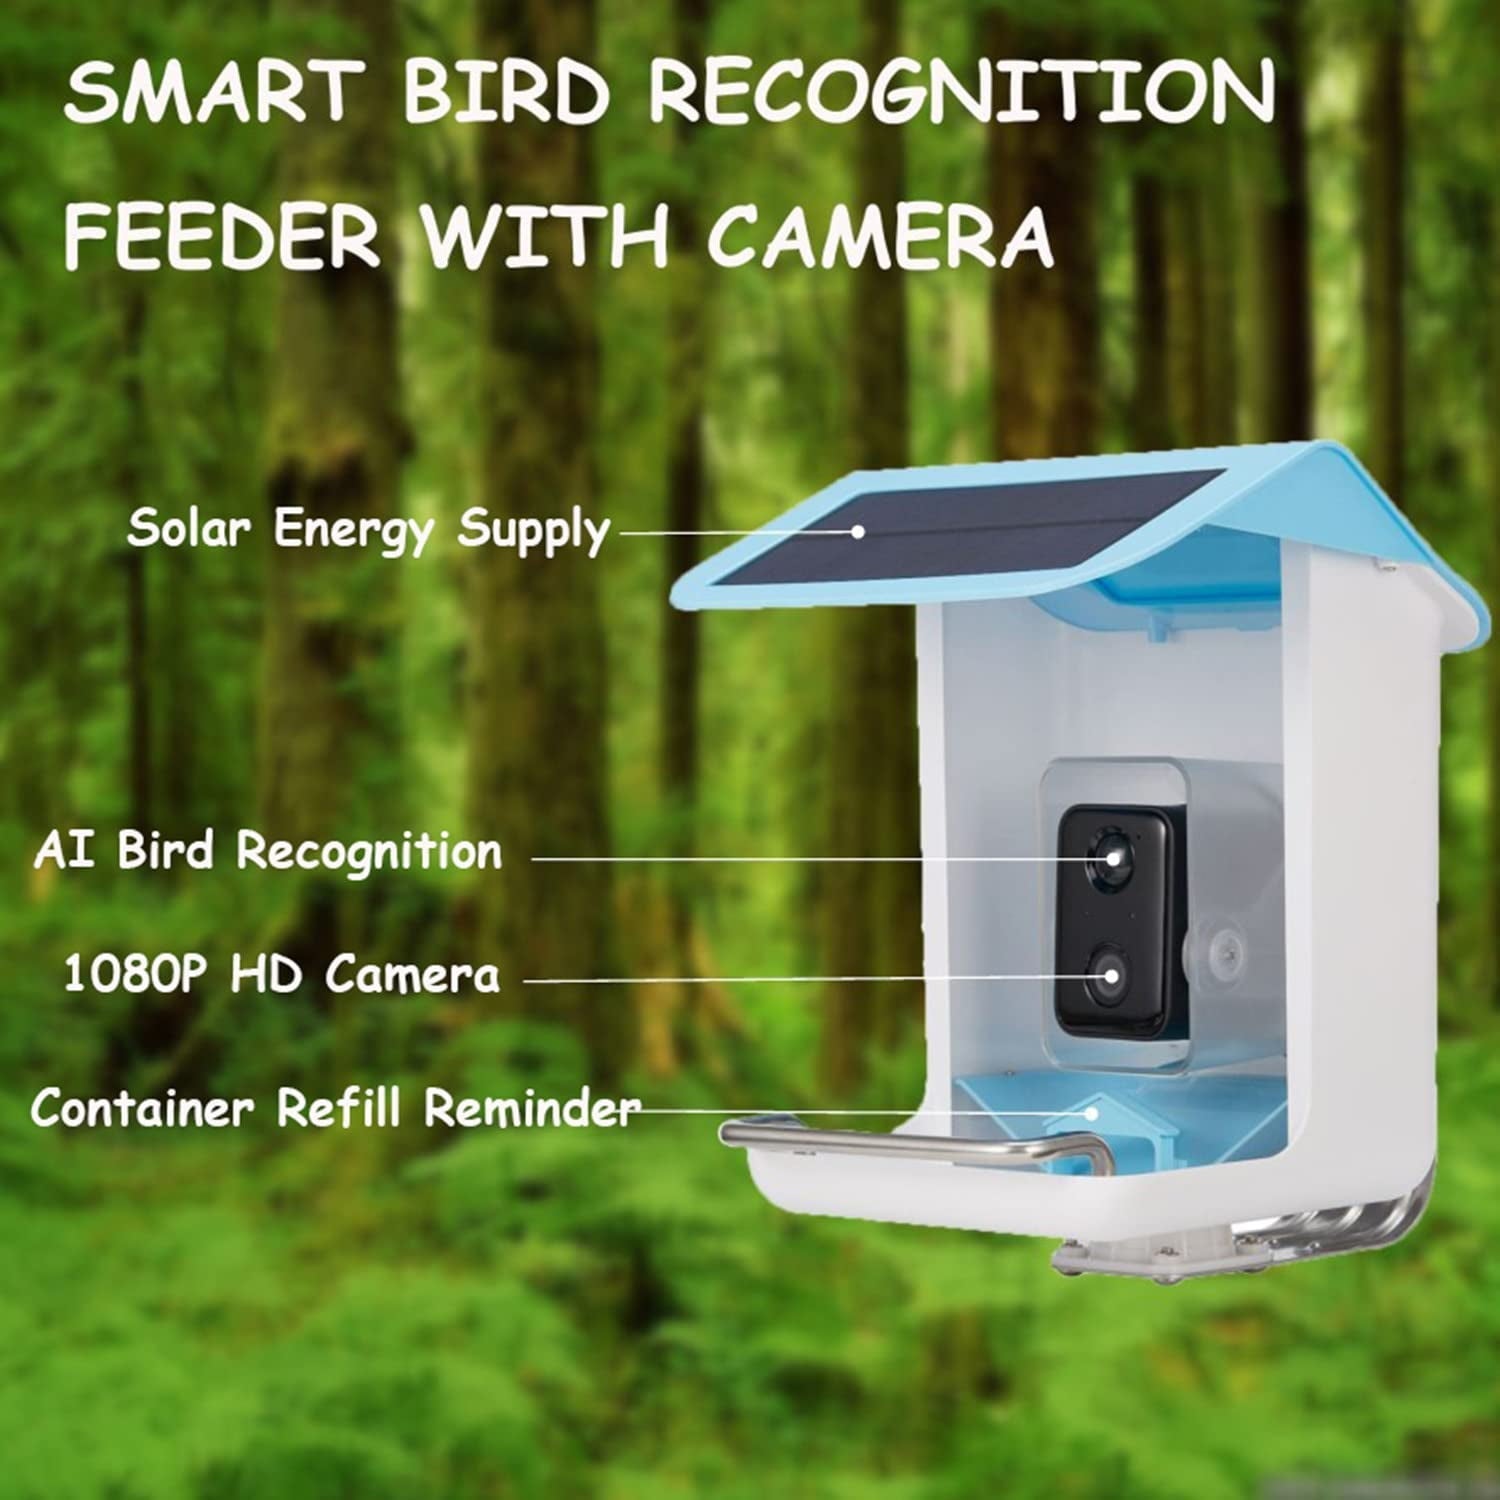 Adrinfly Smart Bird Feeder Camera Bird Feeders Wireless App Control AI Identify Bird Species Auto Capture Bird Videos